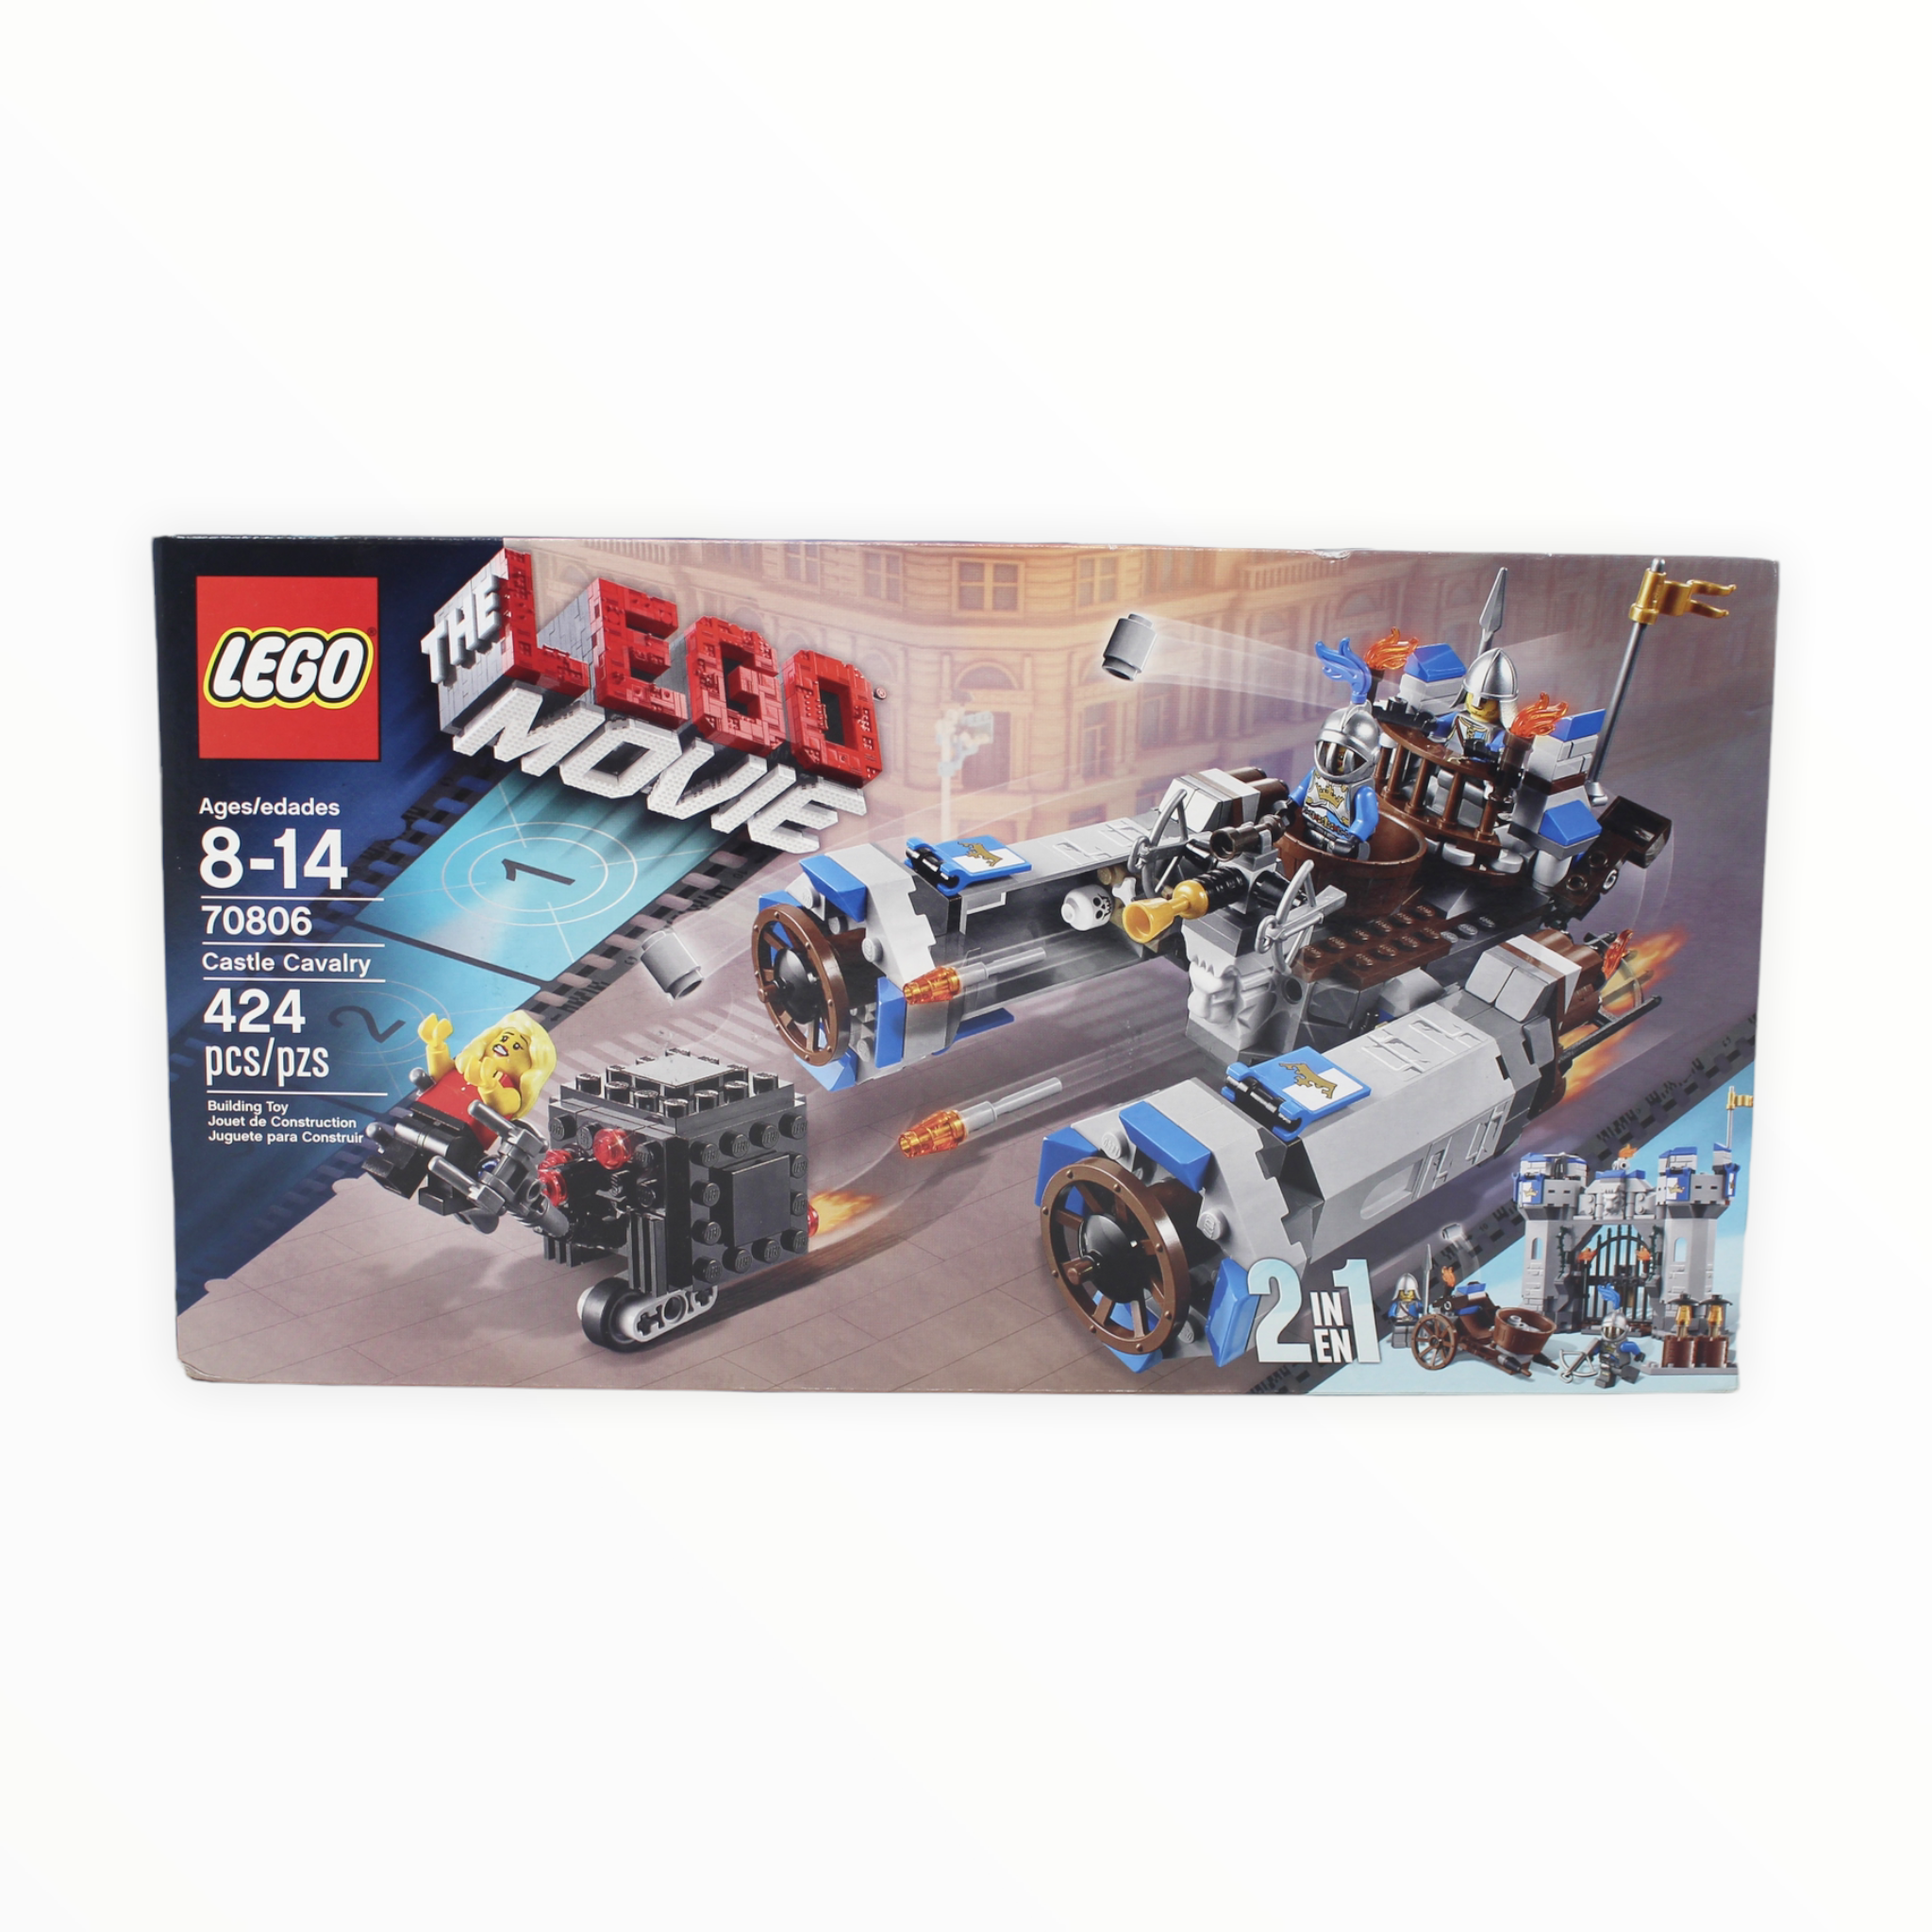 Retired Set 70806 The LEGO Movie Castle Cavalry